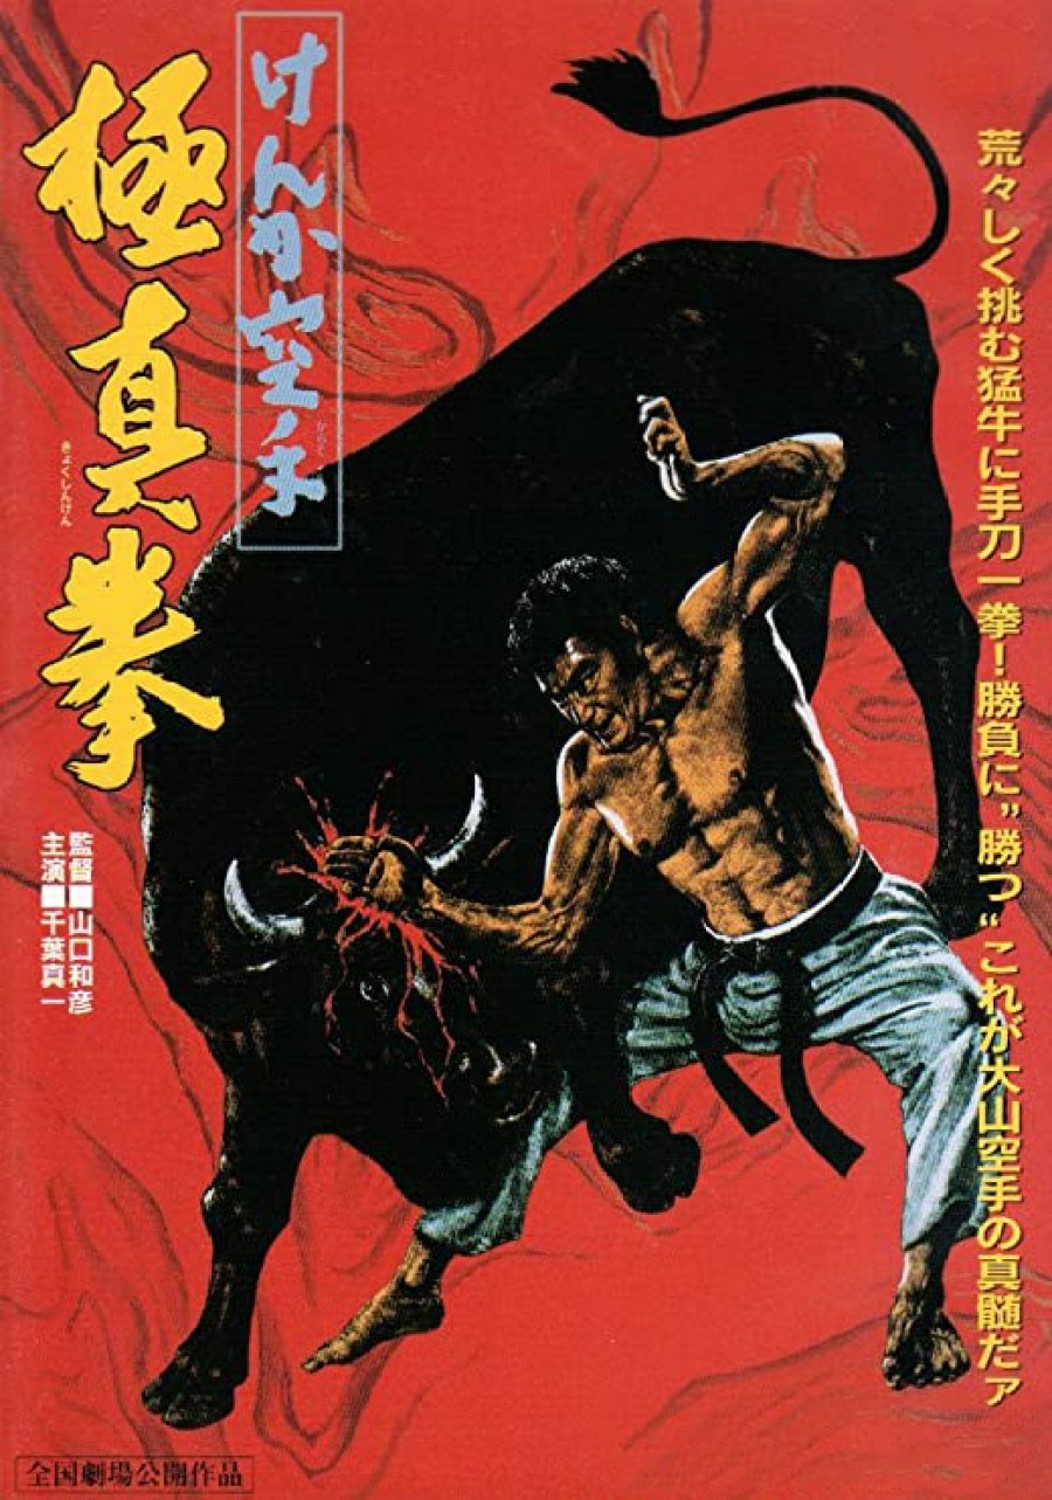 Karate Bullfighter (1975) Poster